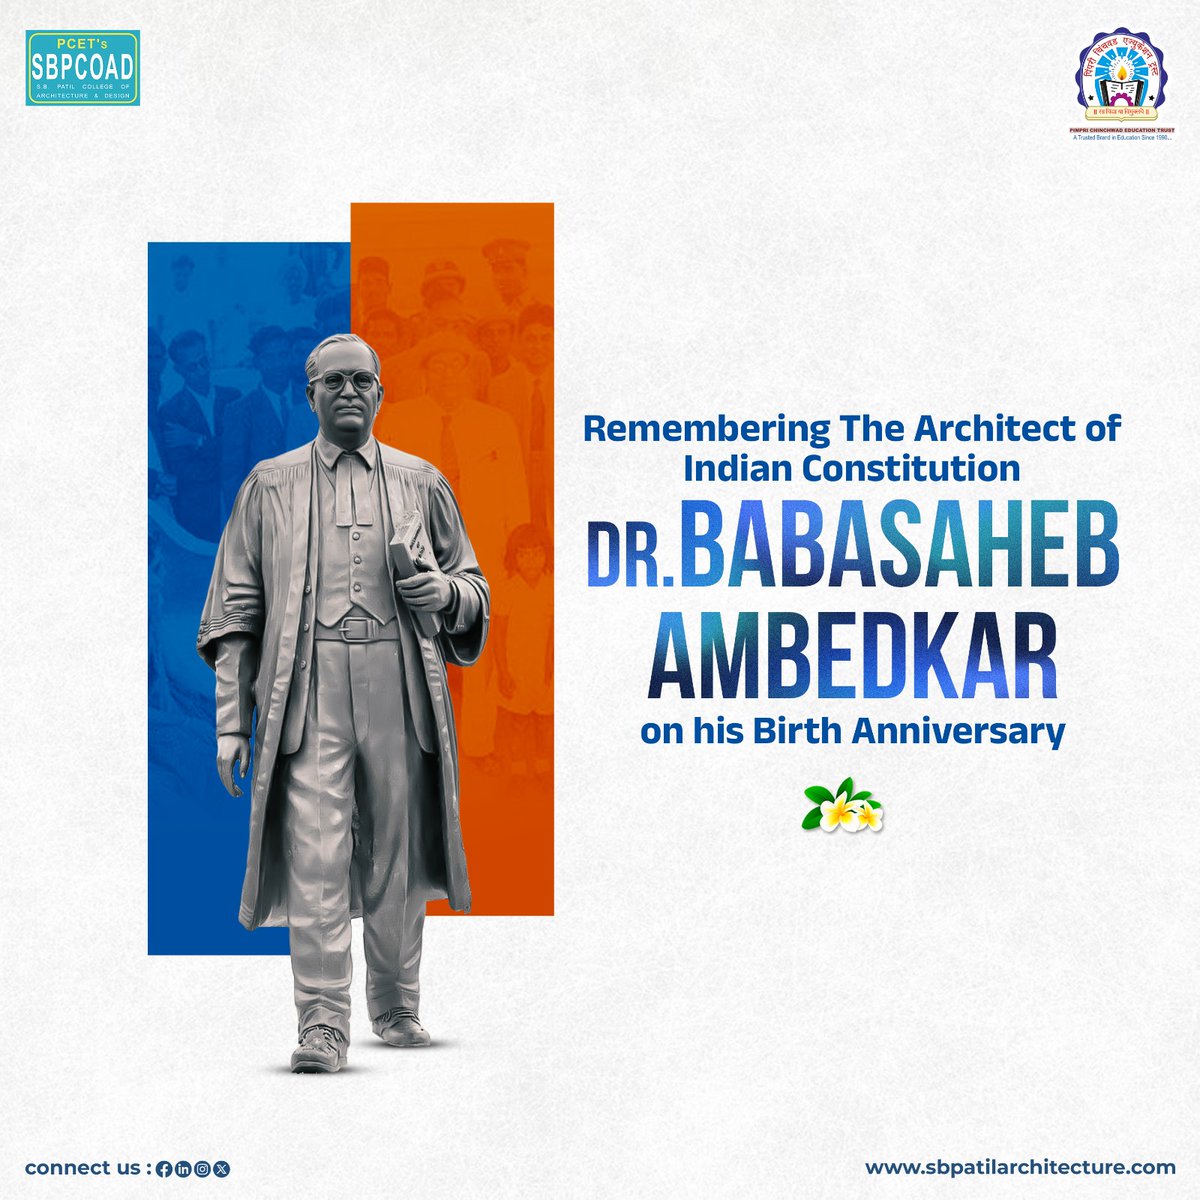 Today, we honor the legacy of Dr. Babasaheb Ambedkar, the architect of the Indian Constitution & tireless advocate for social justice & equality. #PCET #SBPCOAD #AmbedkarJayanti #Ambedkar #DrBRAmbedkar #बाबासाहेबआंबेडकर #आंबेडकरजयंती #संविधाननिर्माता #jaybhim #babasahebambedkar